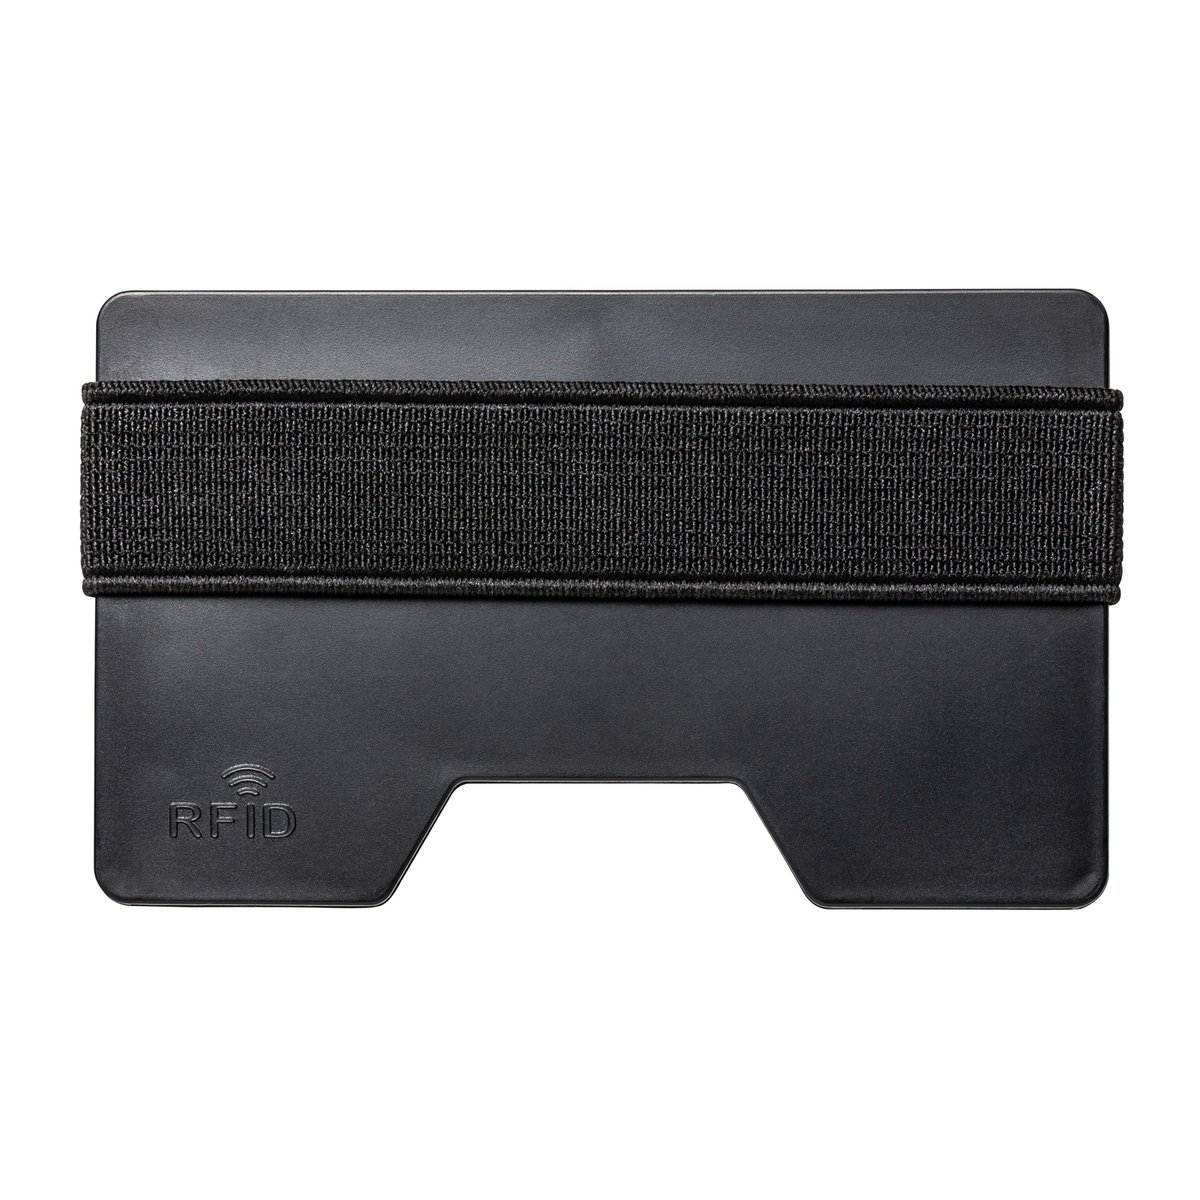 Porte-Cartes avec Protection RFID REFLECTS-LOMITA noir